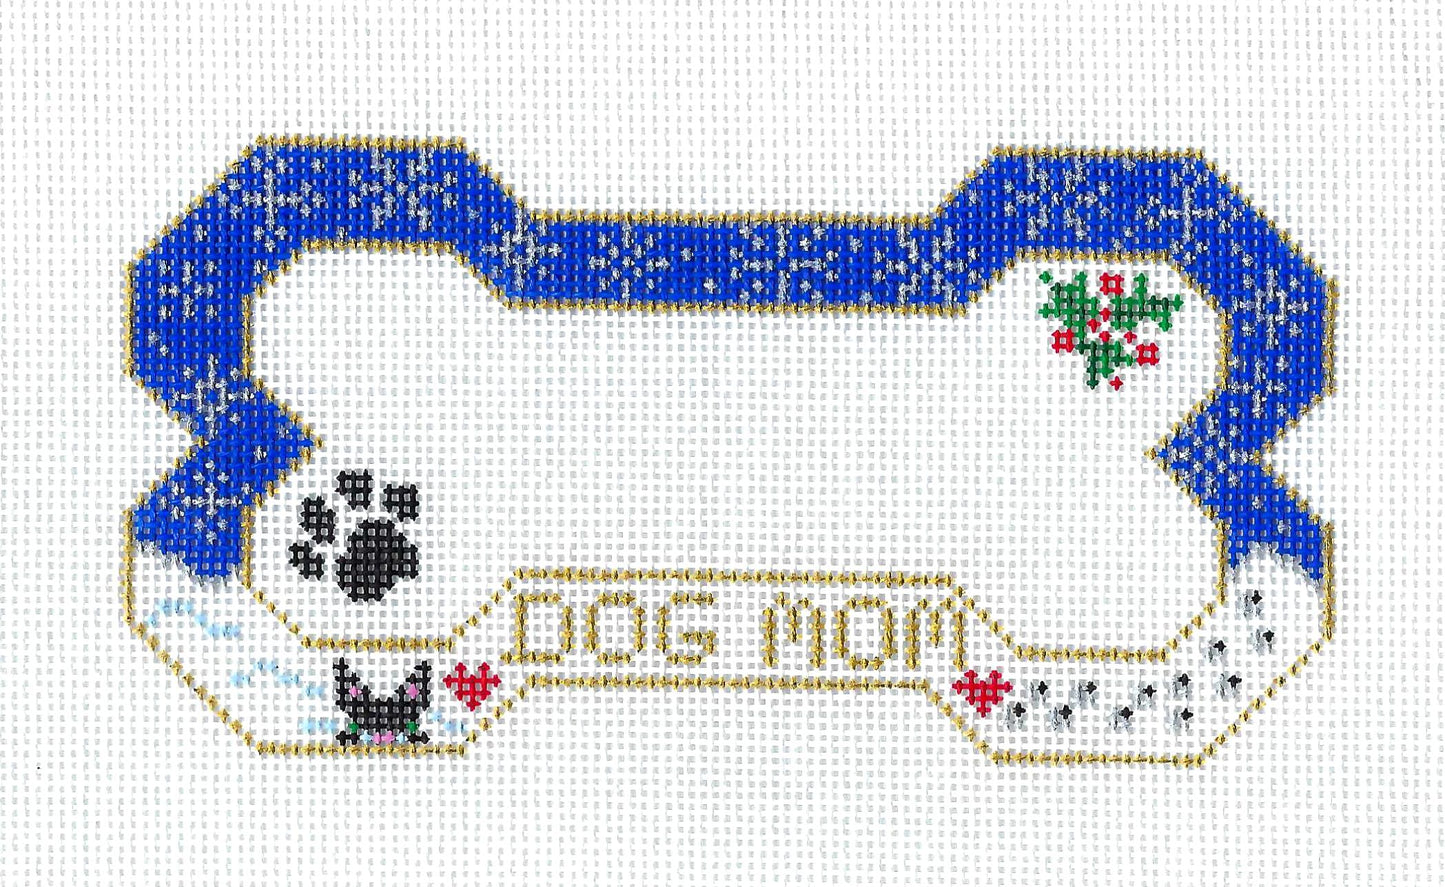 Dog canvas ~ "DOG Mom" Dog bone ornament w/ Snowflakes & Hearts Handpainted Needlepoint Canvas by Danji